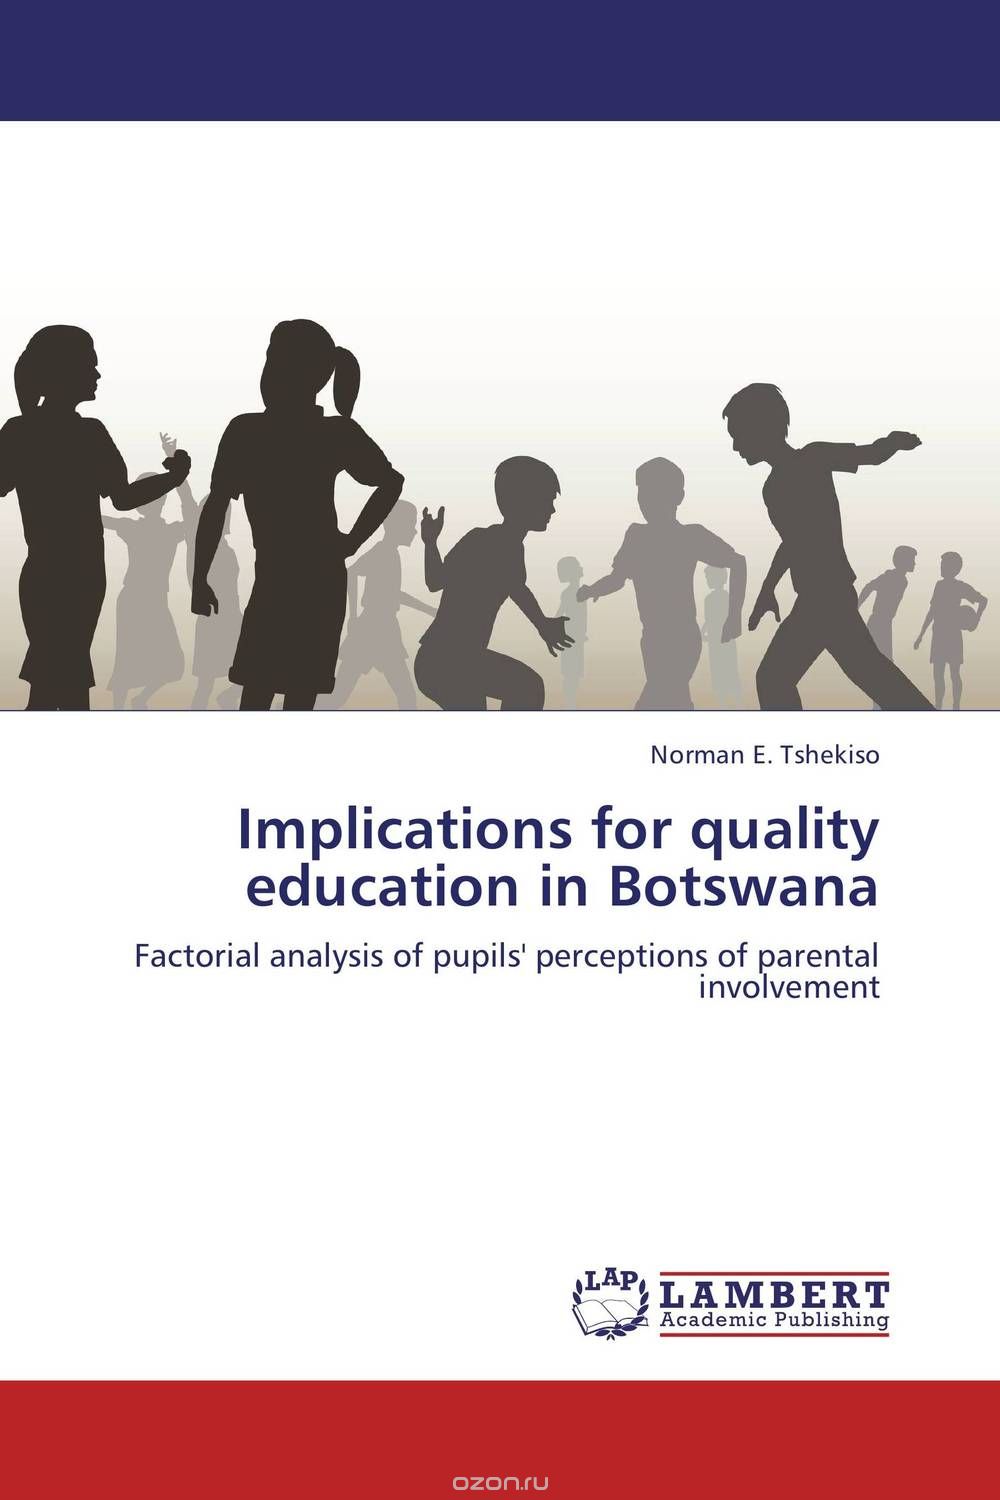 Скачать книгу "Implications for quality education in Botswana"